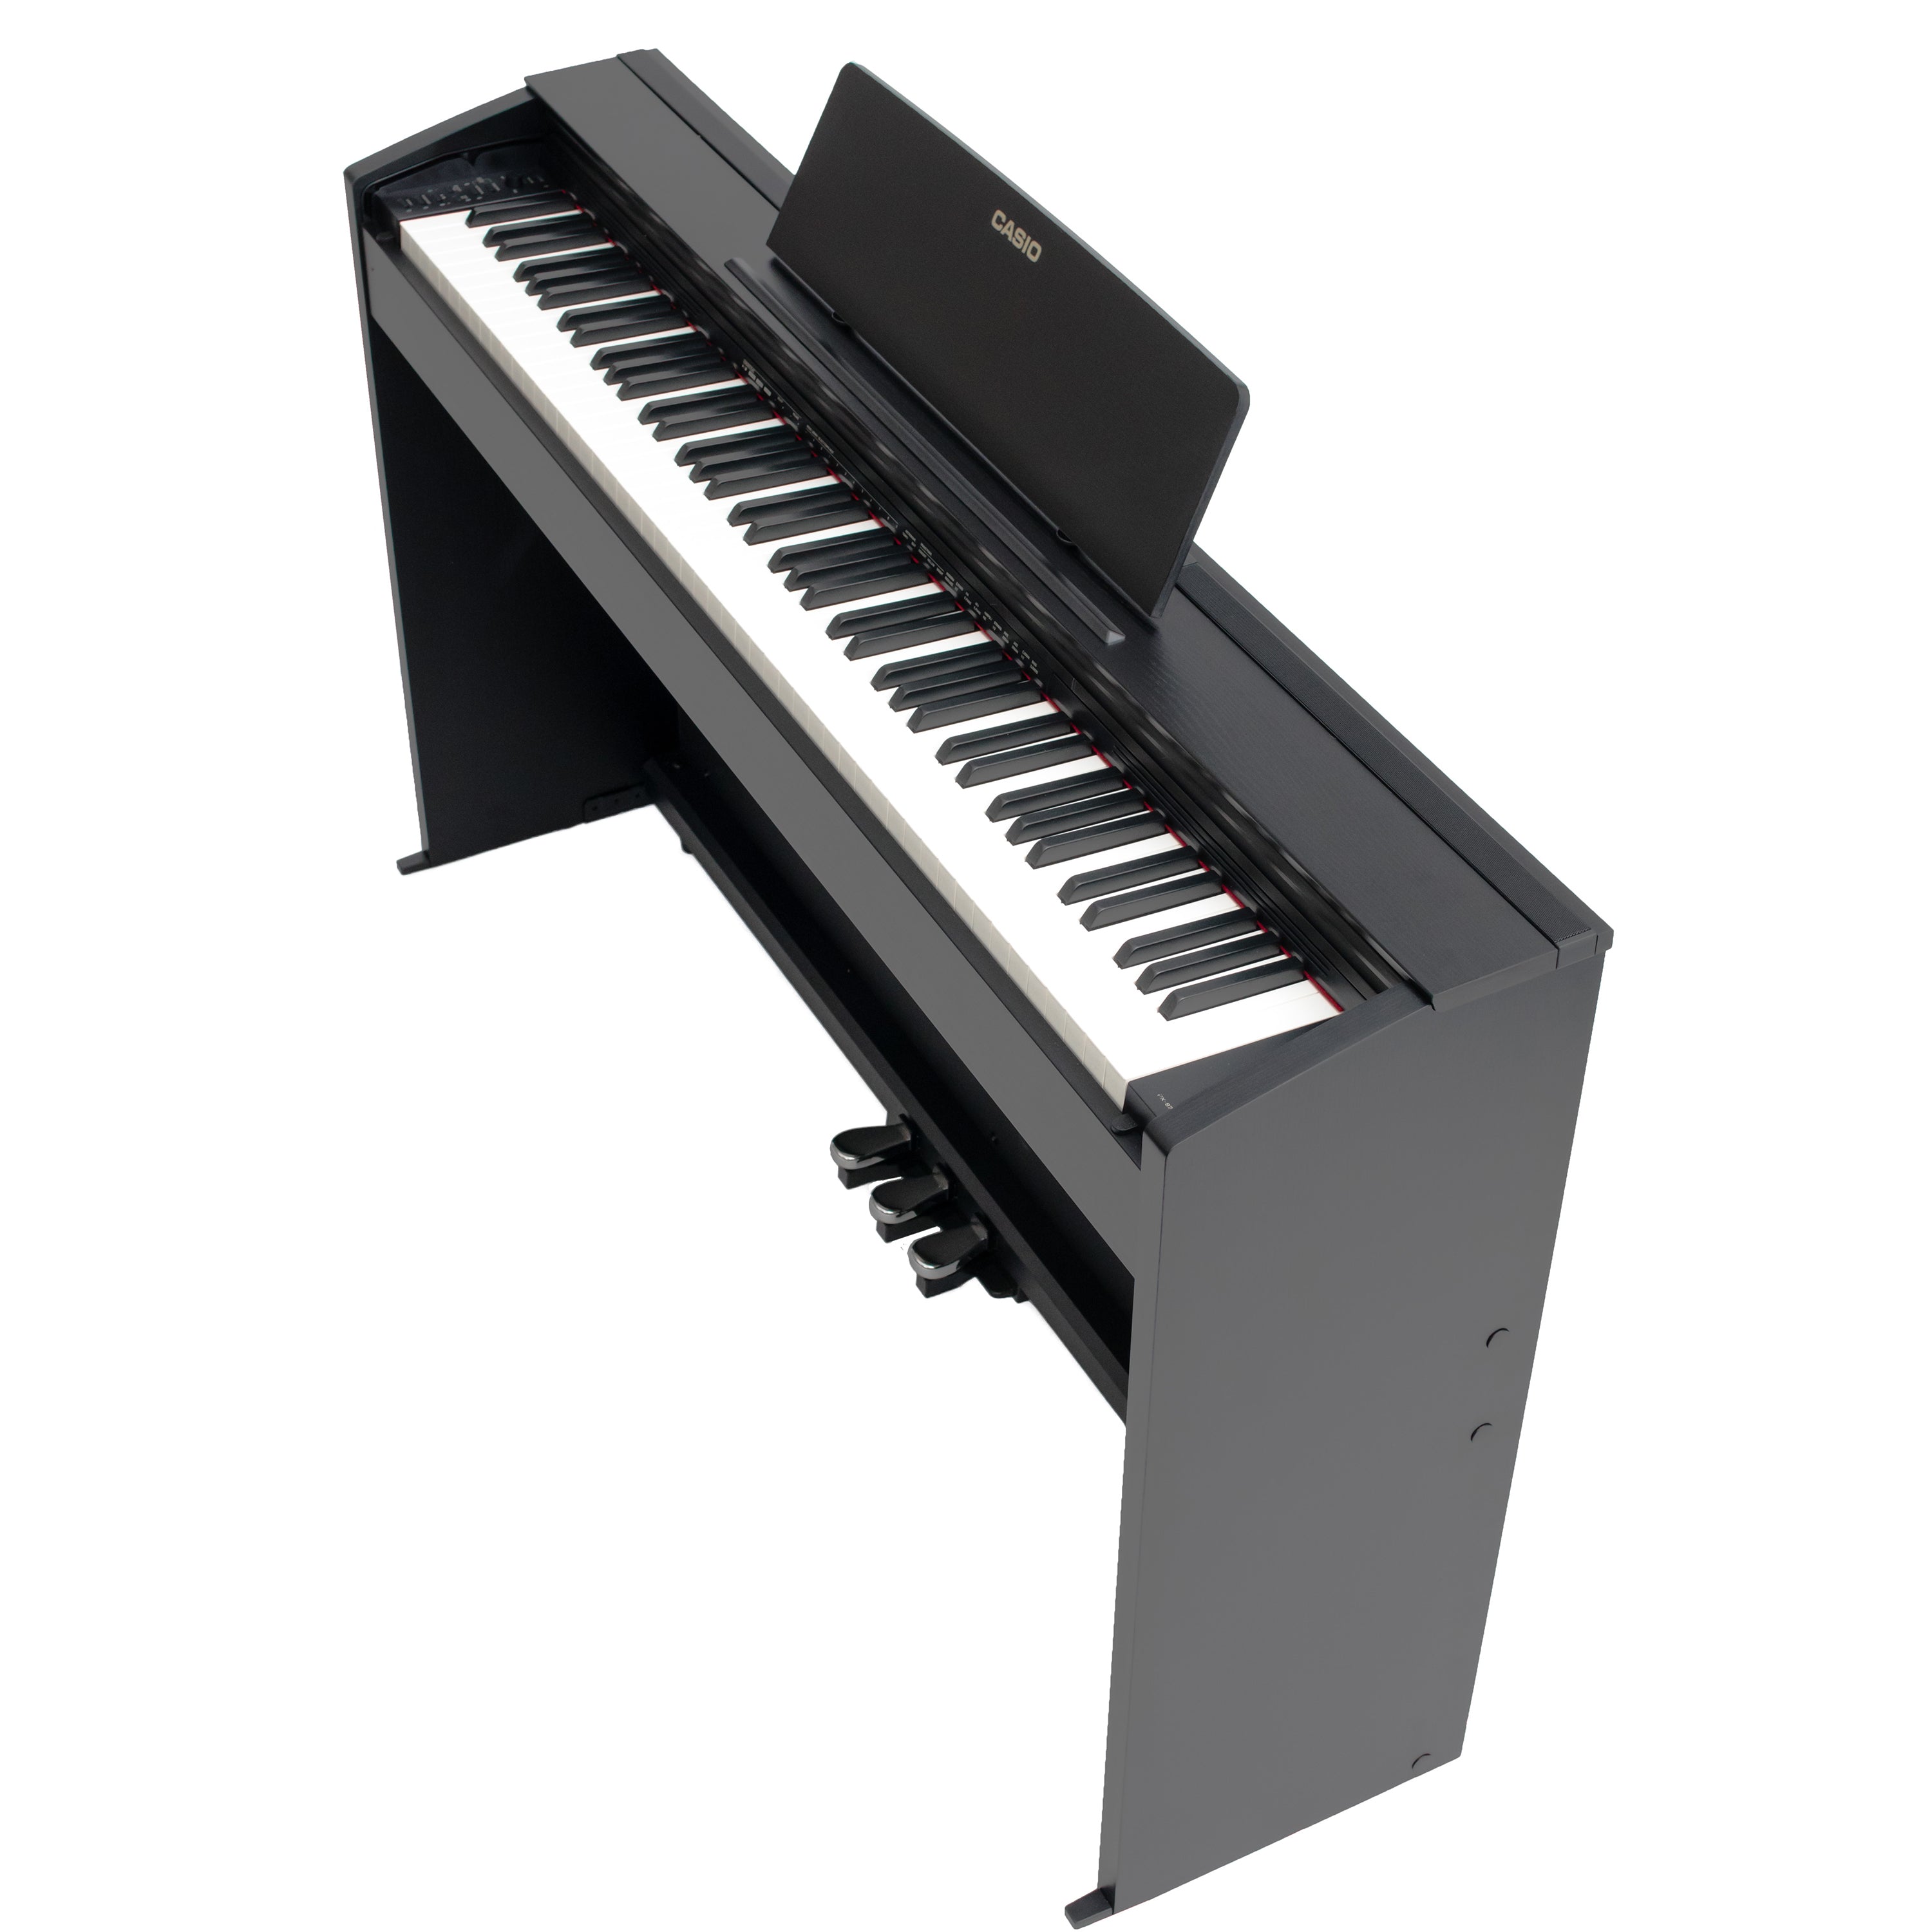 Casio Privia PX-870 Digital Piano - Black COMPLETE HOME BUNDLE PLUS – Kraft  Music